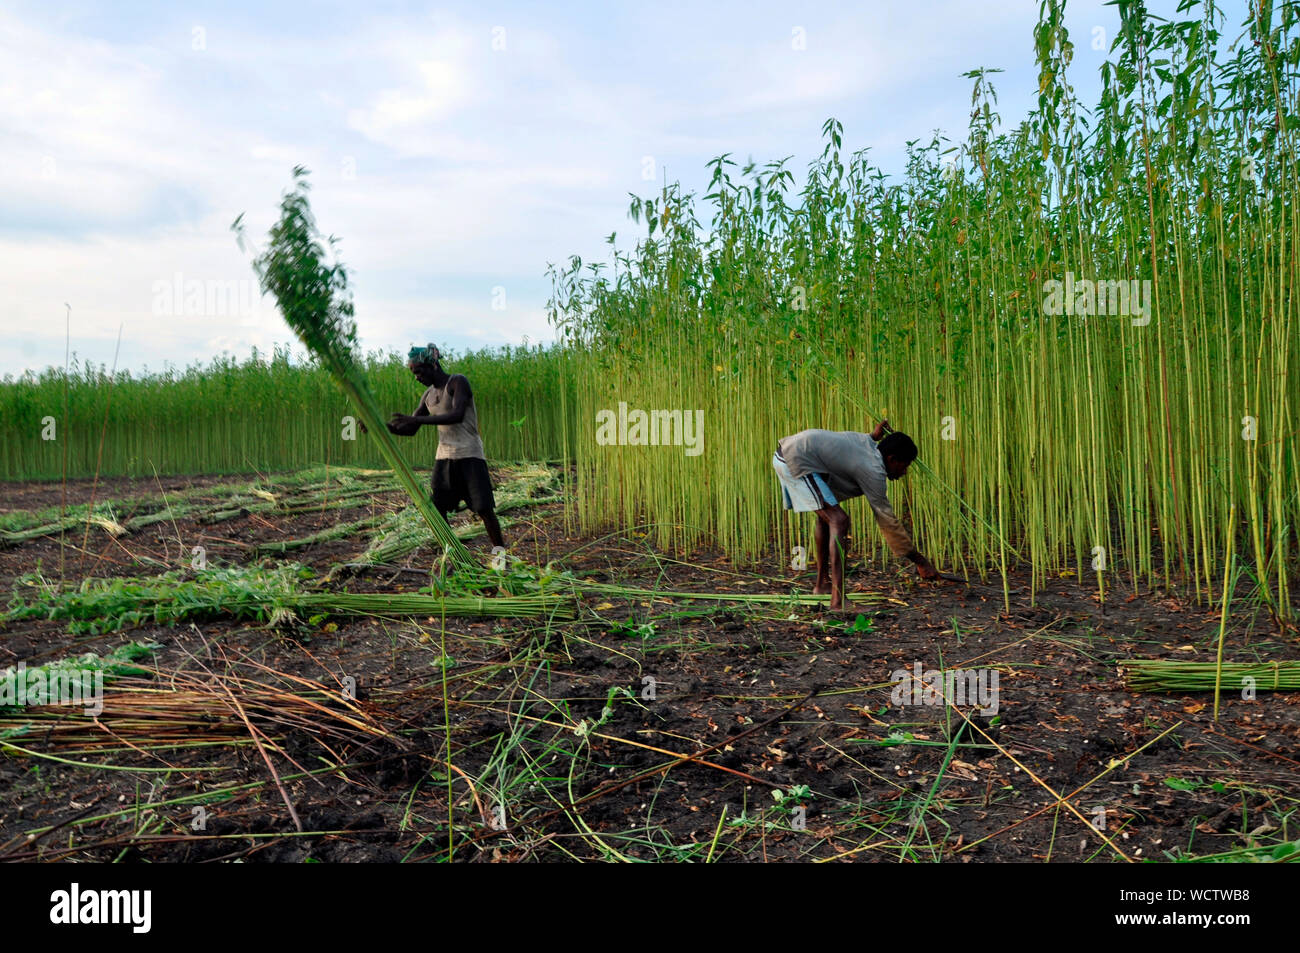 Landwirte sammeln Jute Stengel aus den Feldern. Achtzig Prozent der hochwertige Jute der Welt wächst in Bangladesch. Narail, Jessore, Bangladesch. 31. Juli 2011. Stockfoto